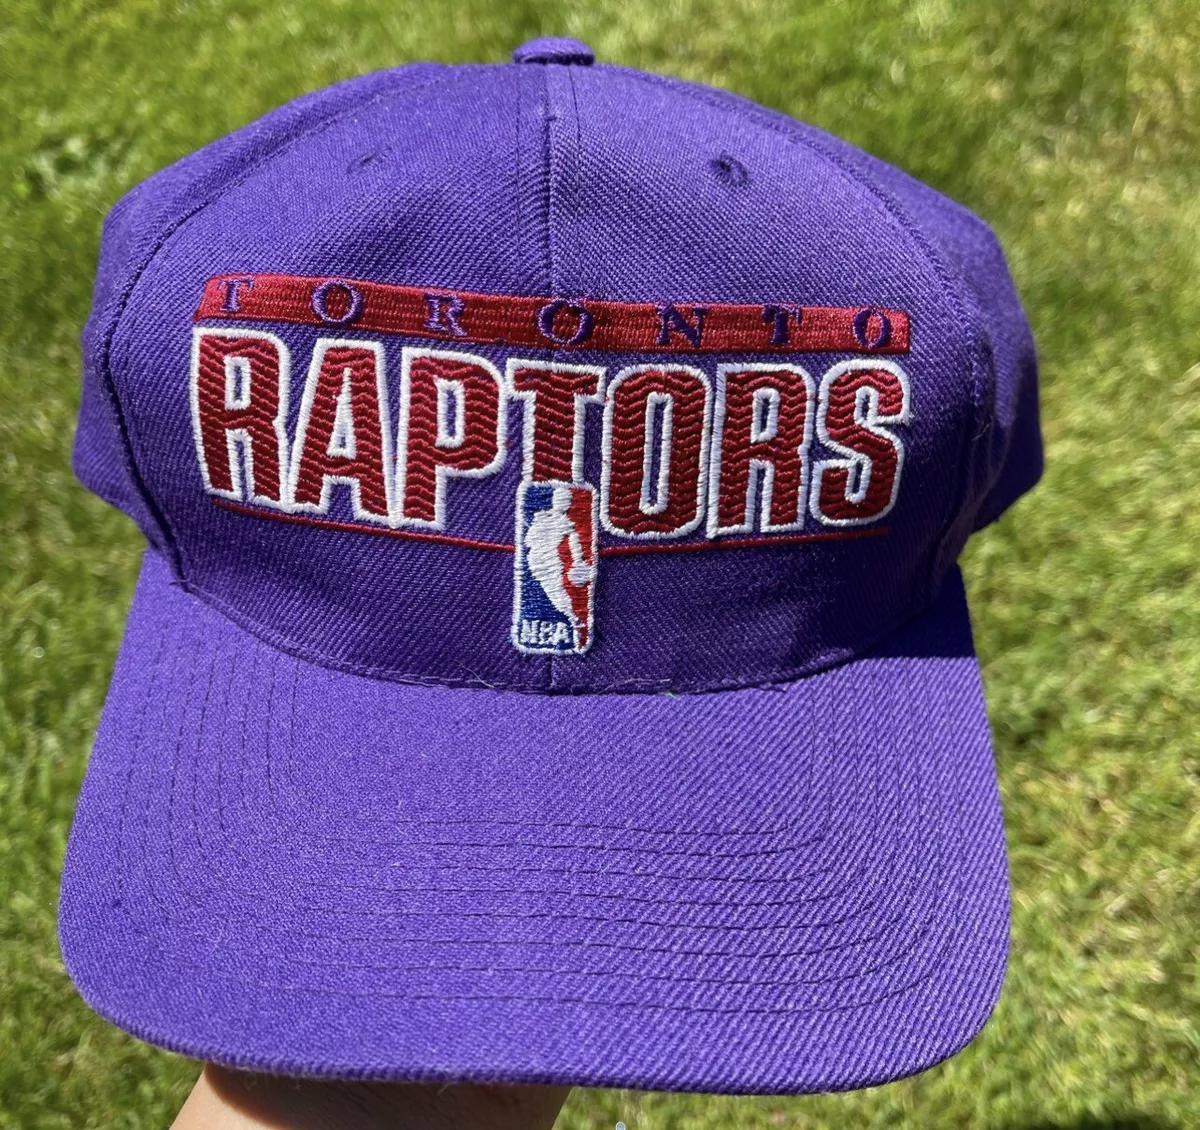 raptors hat purple